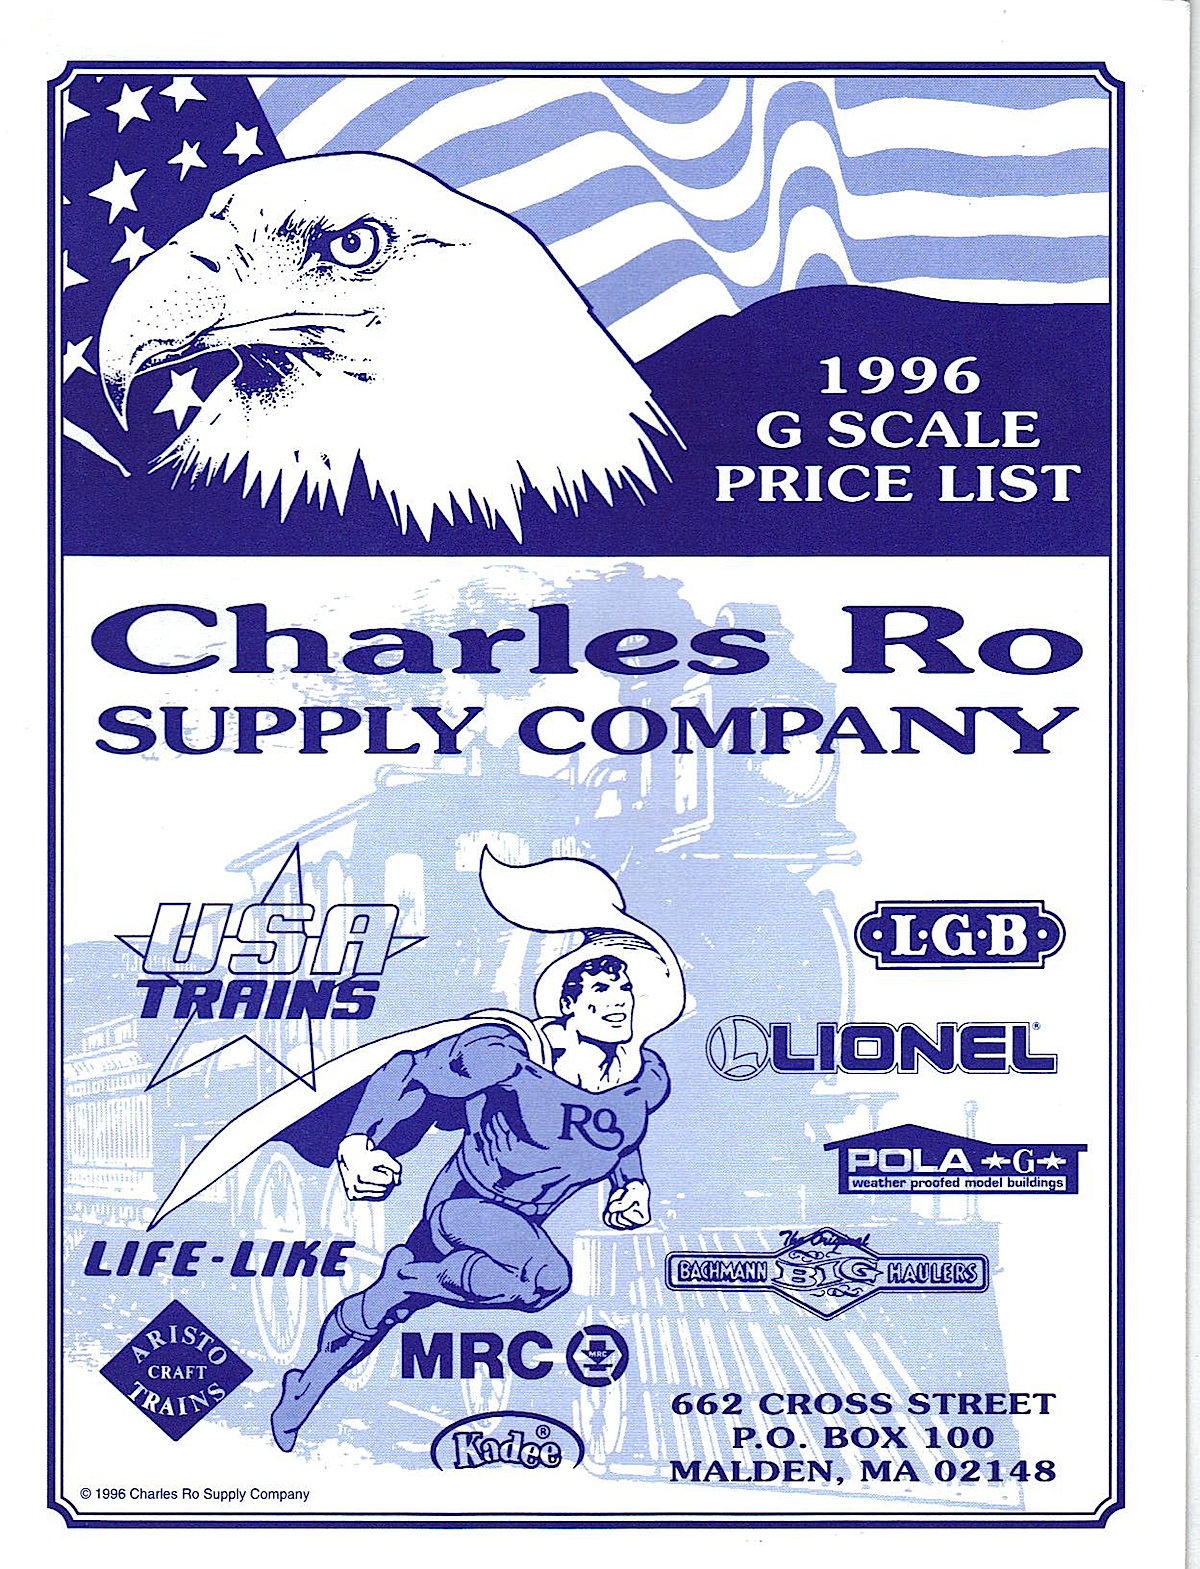 Charles Ro Preisliste 1996 (Charles Ro price list 1996)